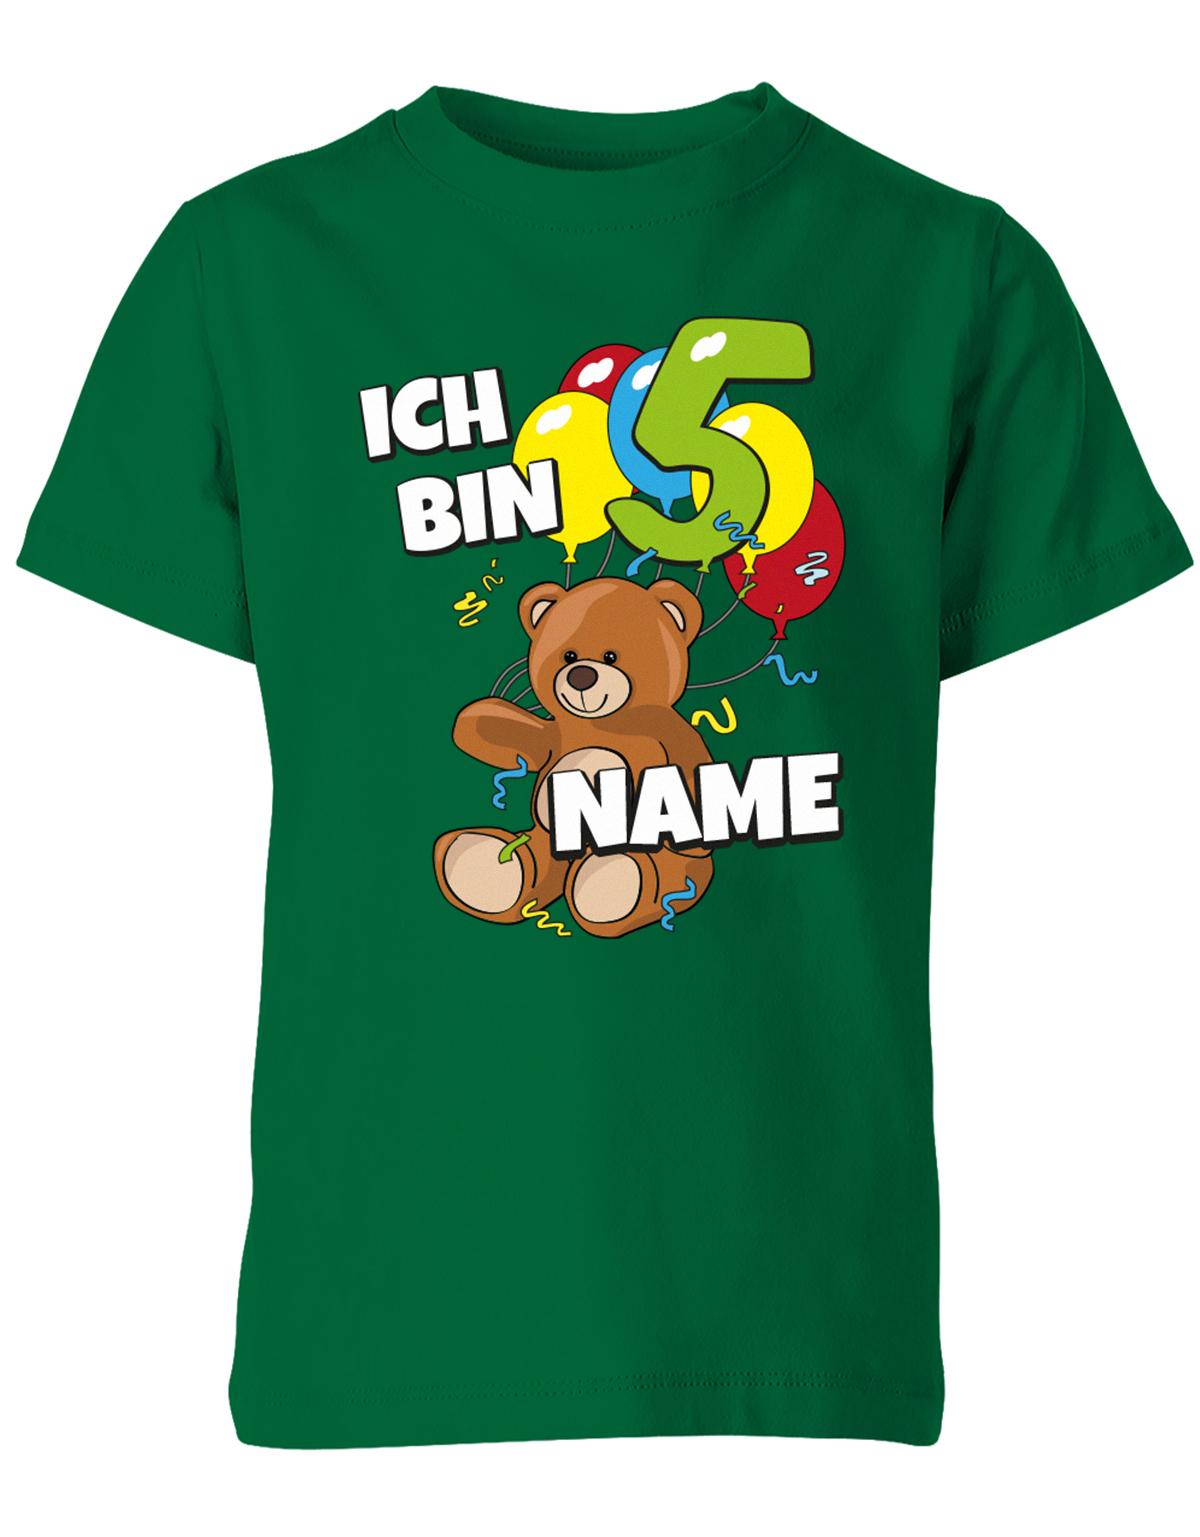 ich-bin-5-teddy-luftballons-kinder-shirt-gruen